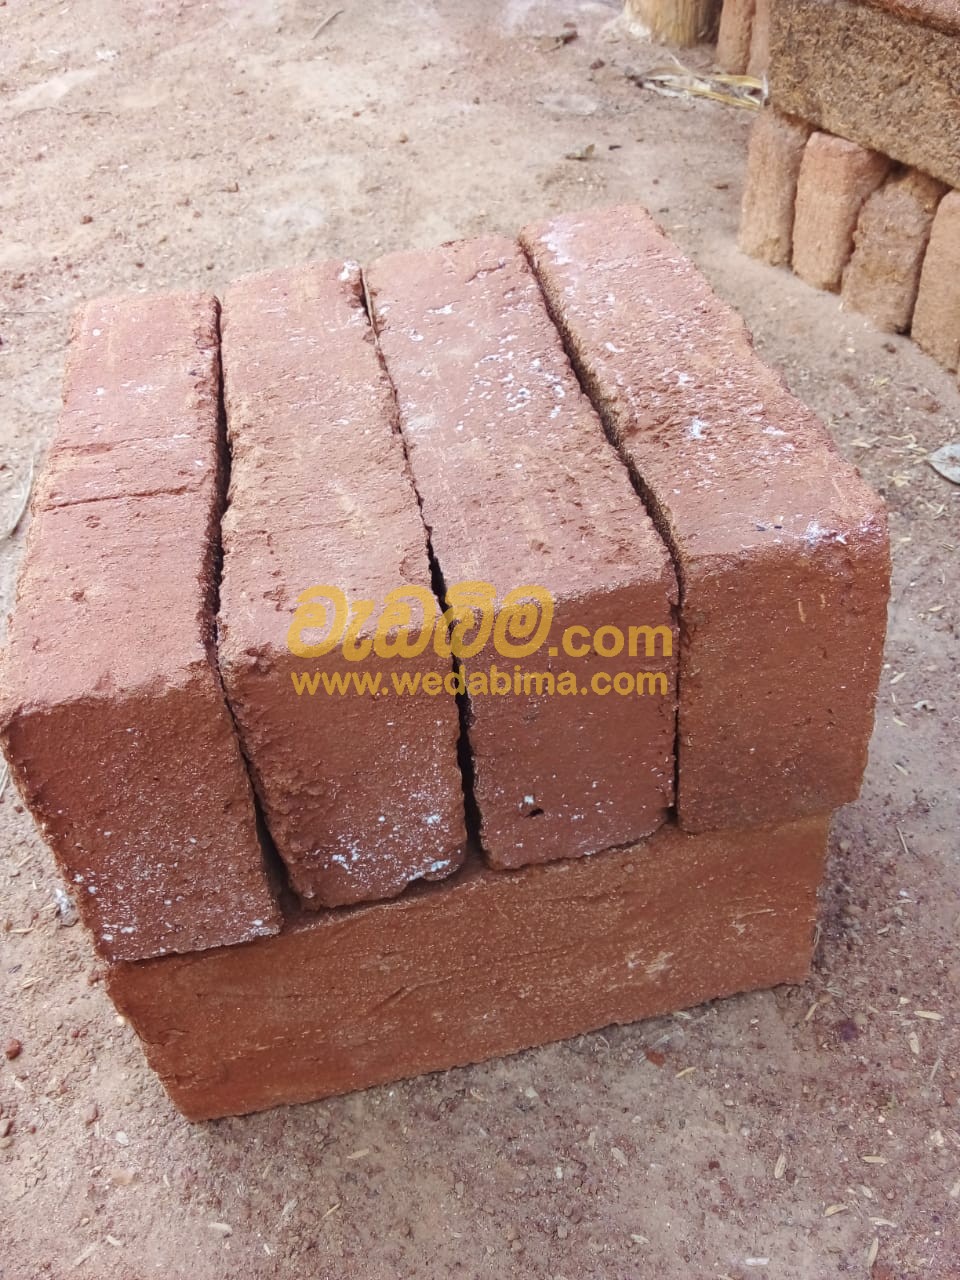 Engineering Brick Suppliers in Rathnapura Sri Lanka